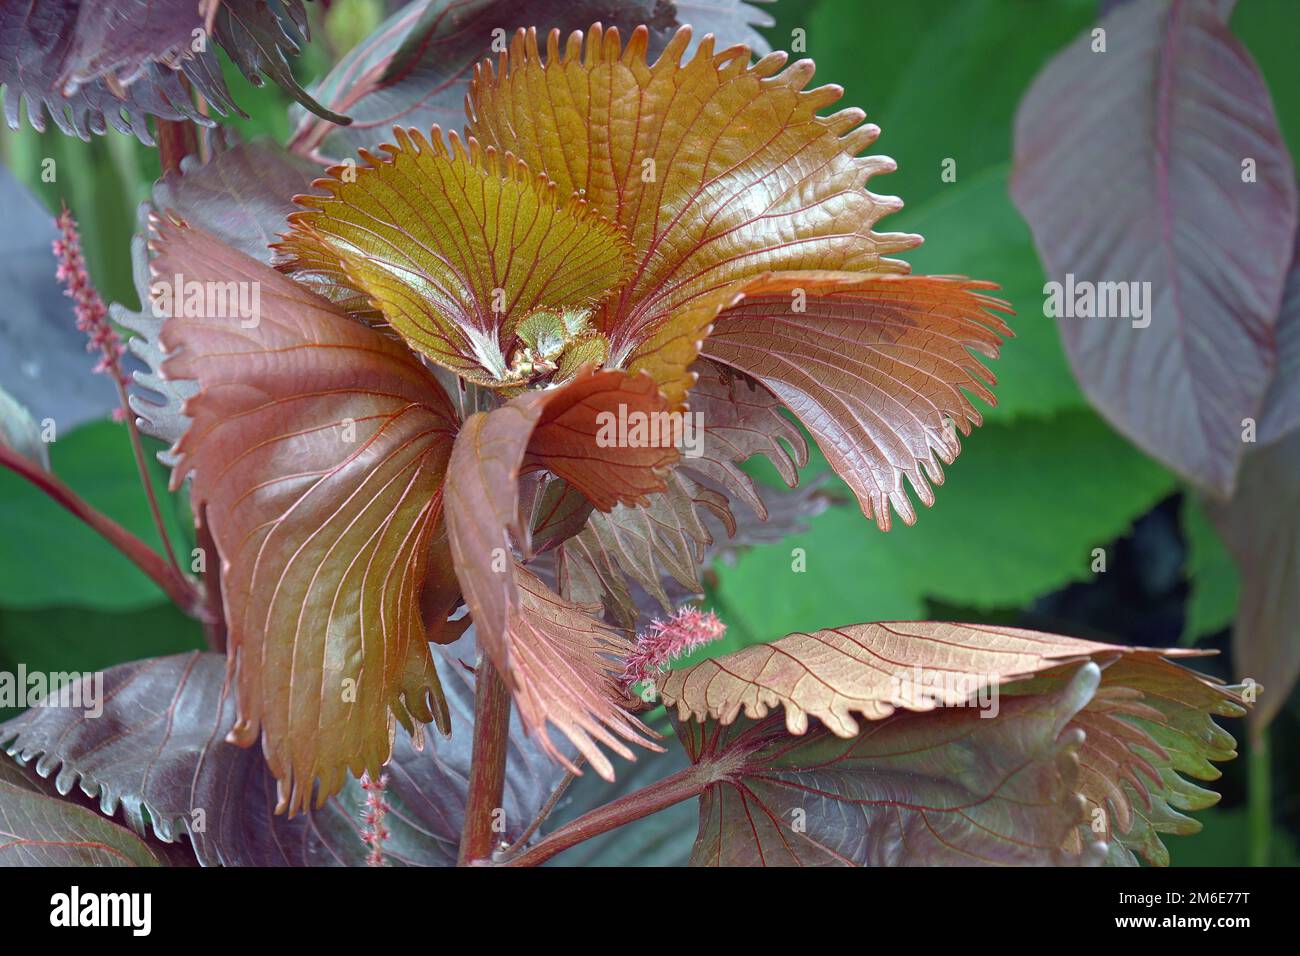 Close up image of Fire Dragon leaves and flowers (Acalypha wilkesiana Haleakala) Stock Photo